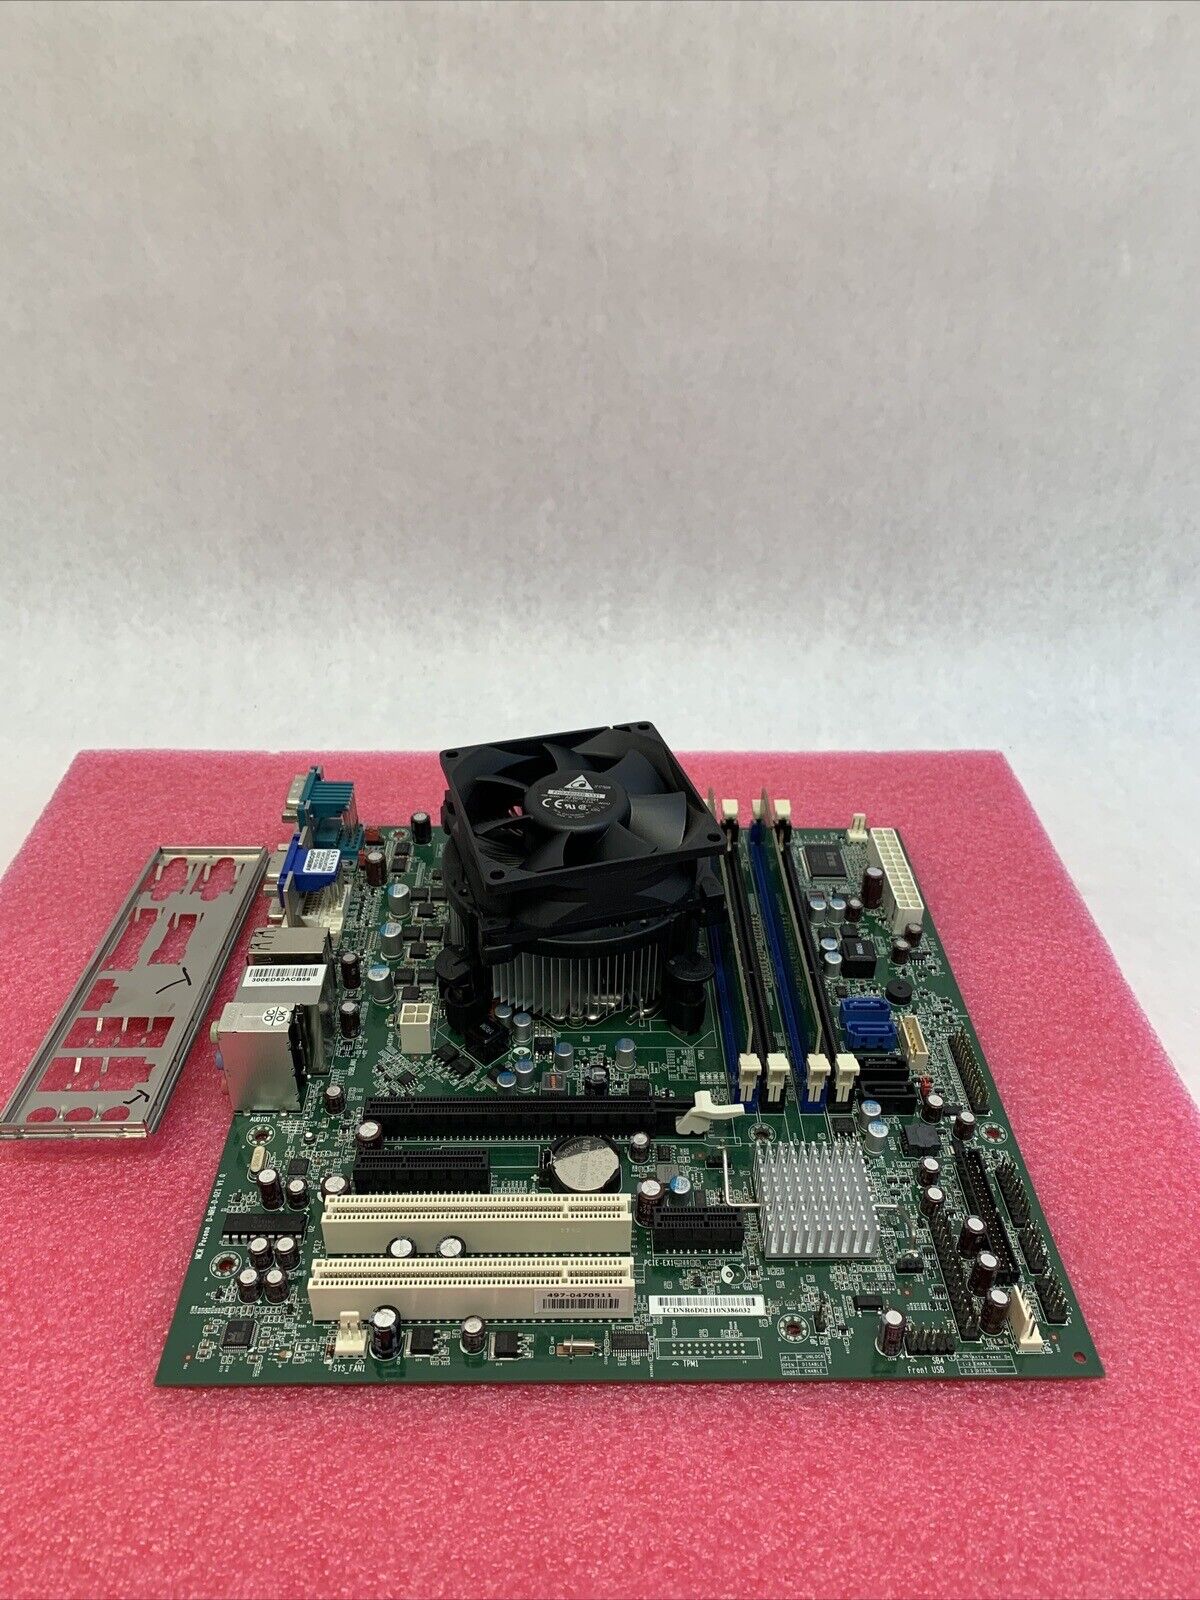 NCR Pocono D-NR6-D021 Motherboard Intel Core i5-2400 3.1GHz 4GB RAM w/Shield